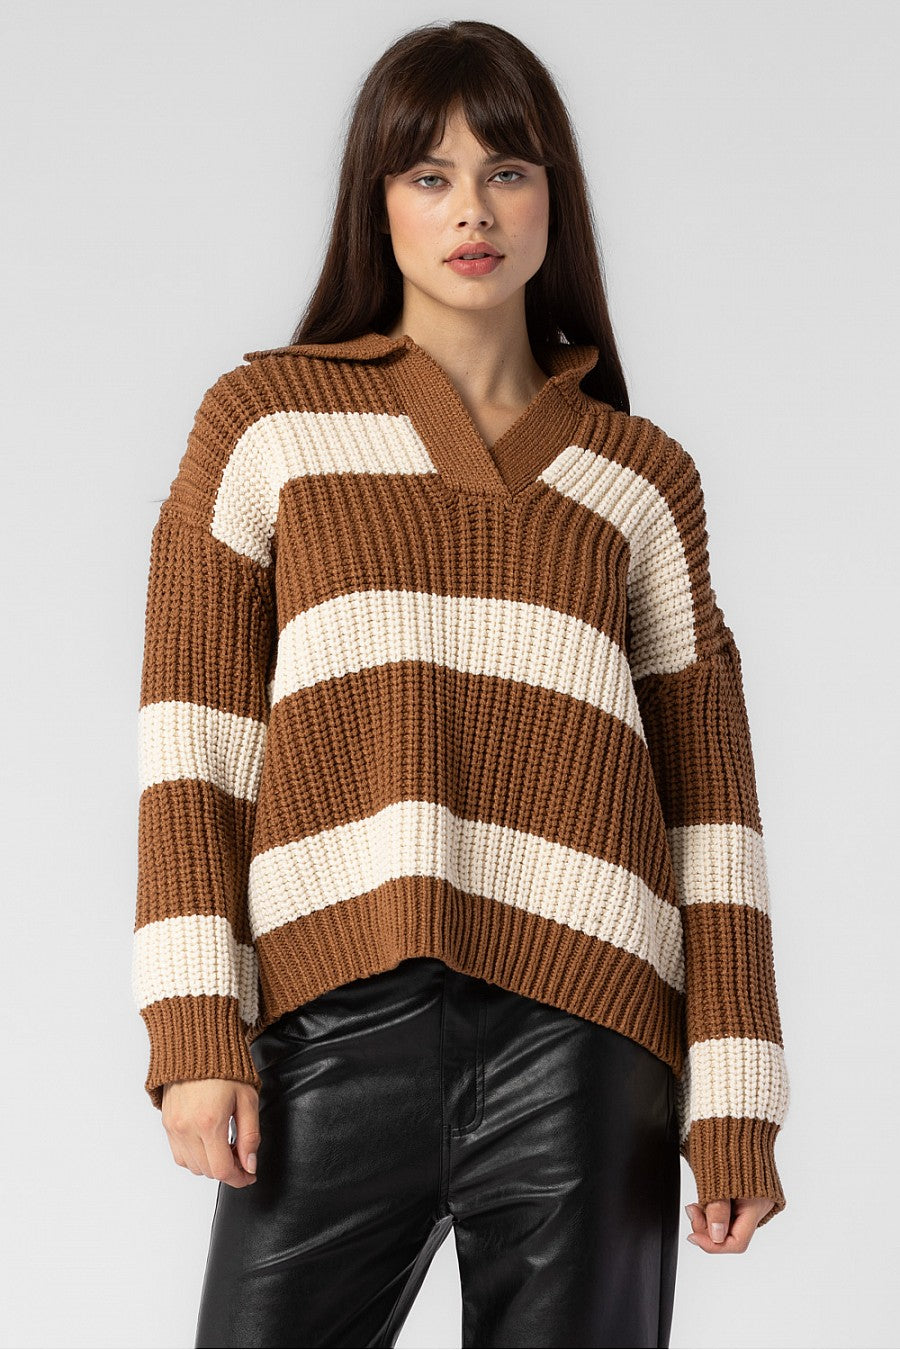 caramel swirl sweater